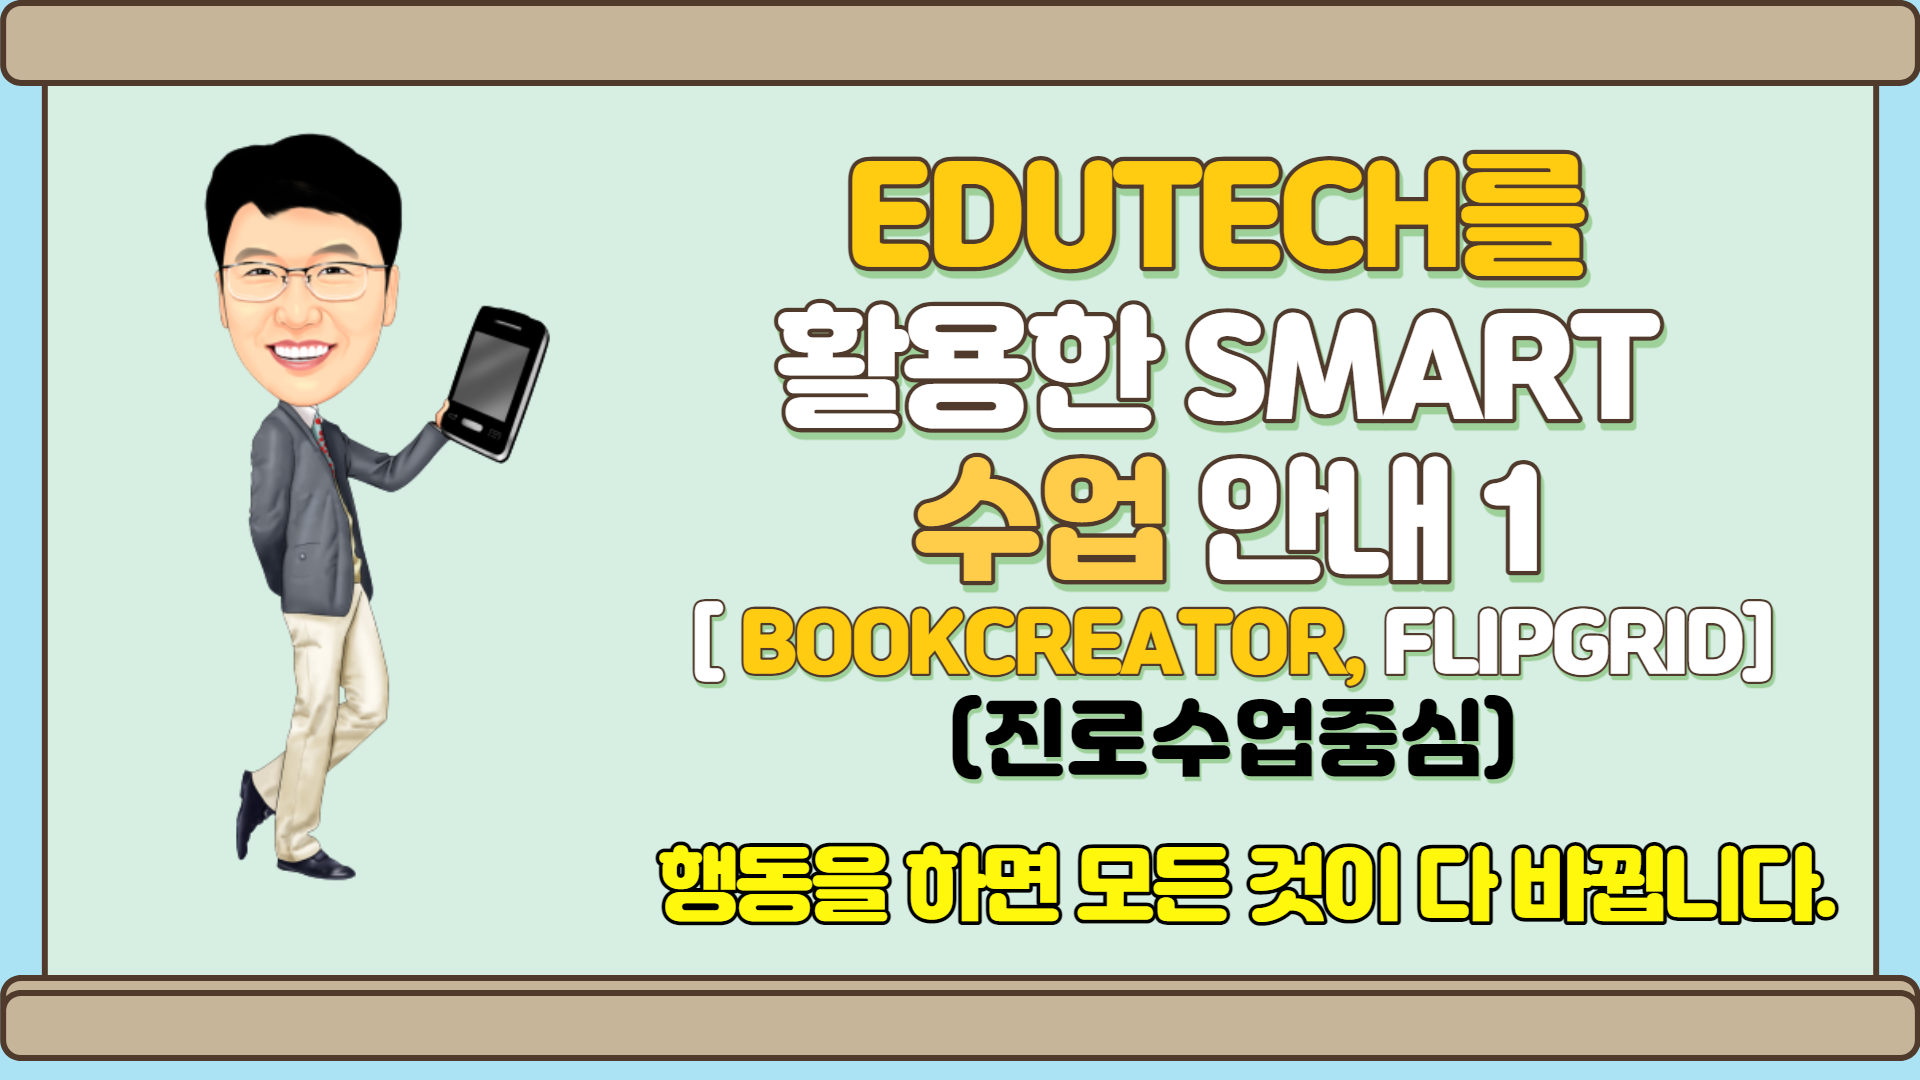 EDUTECH를 활용한 smart 수업 방법 안내 1(진로수업을 중심으로)(bookcreator, Flipgrid) 19:00~20:50